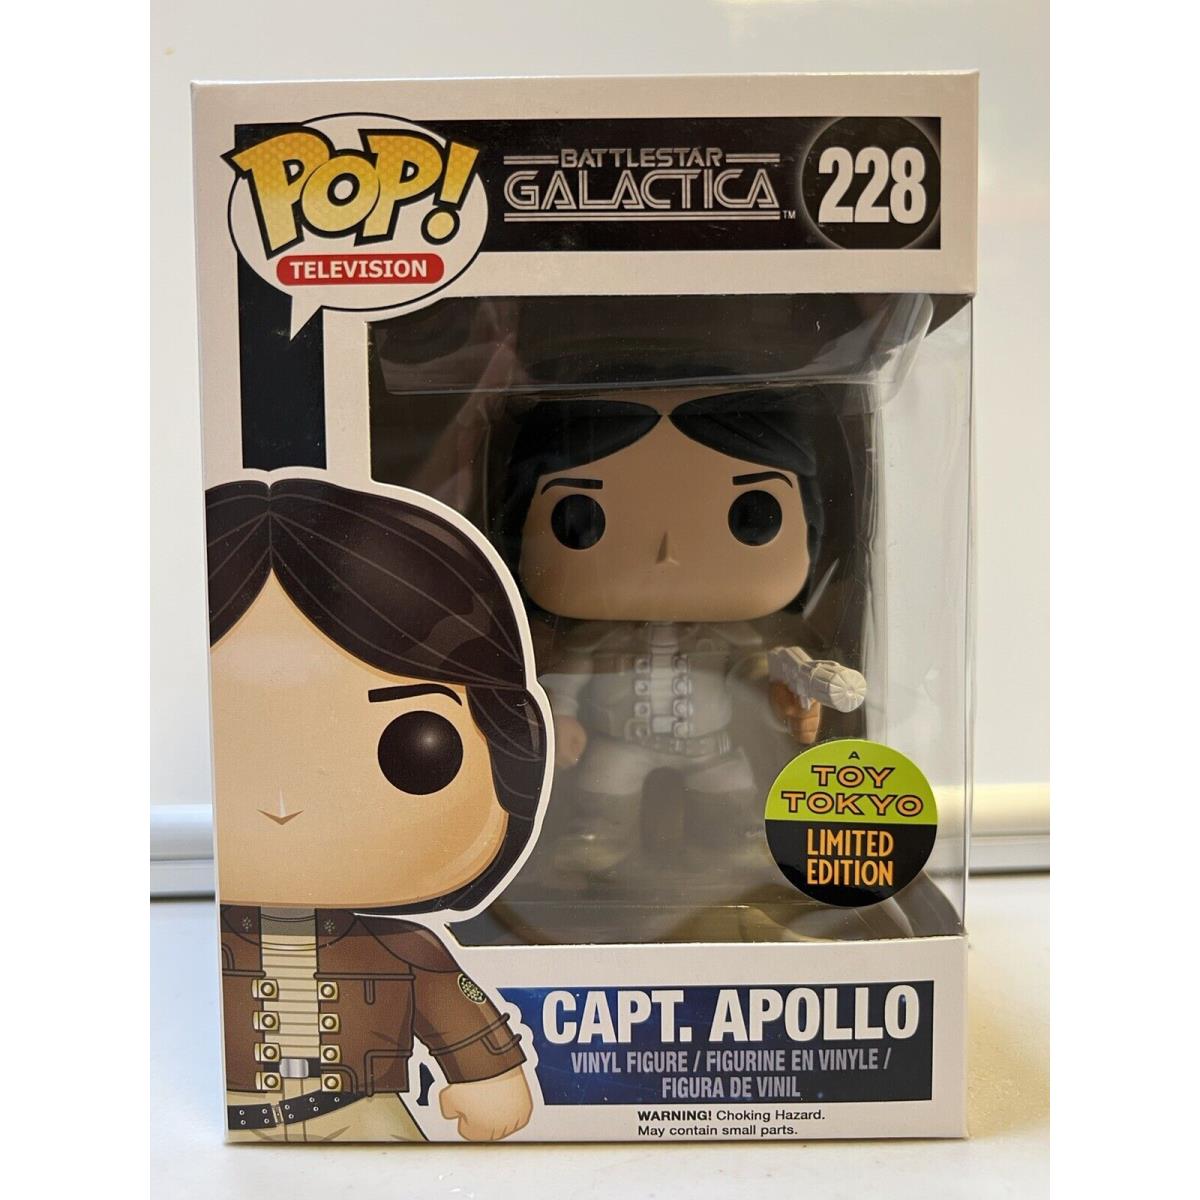 Funko Pop Television Capt. Apollo Battlestar Galactica 228 A Toy Tokyo LE